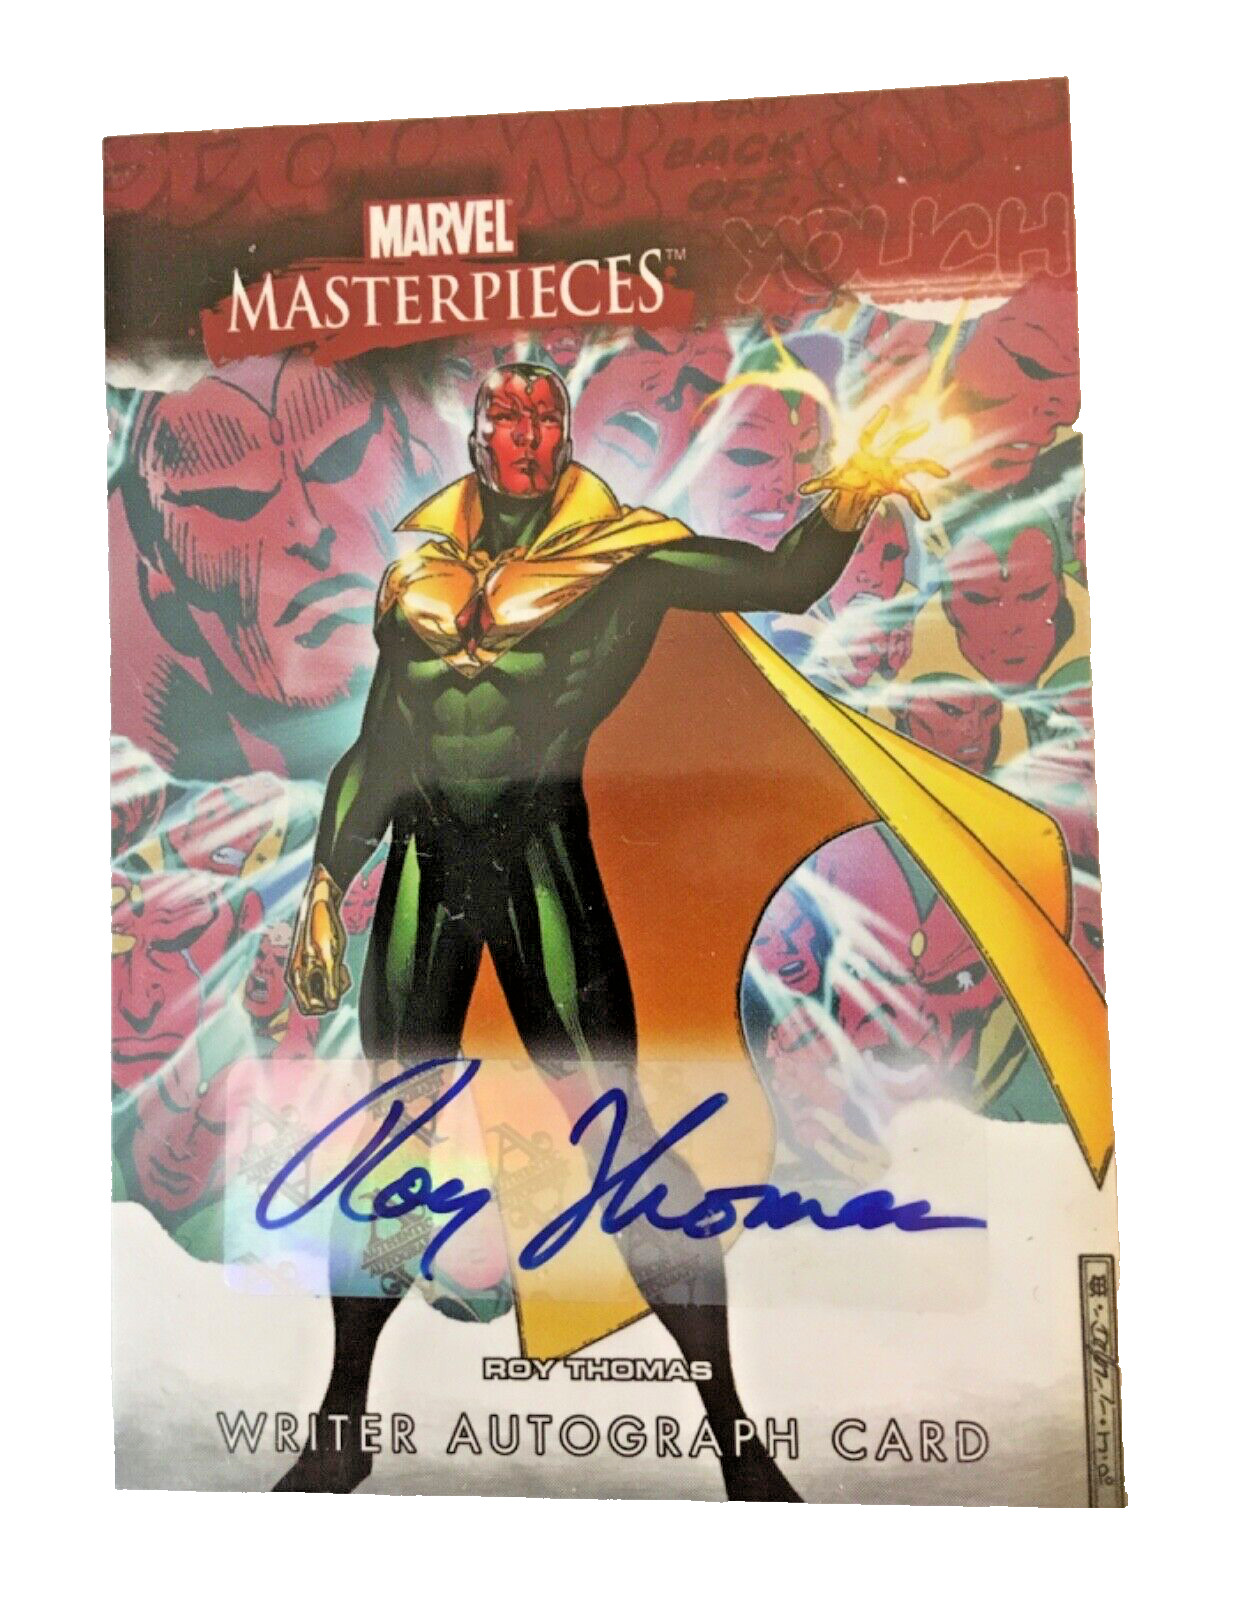 ROY THOMAS 2008 UD Marvel Masterpieces Auto Card RT Signed